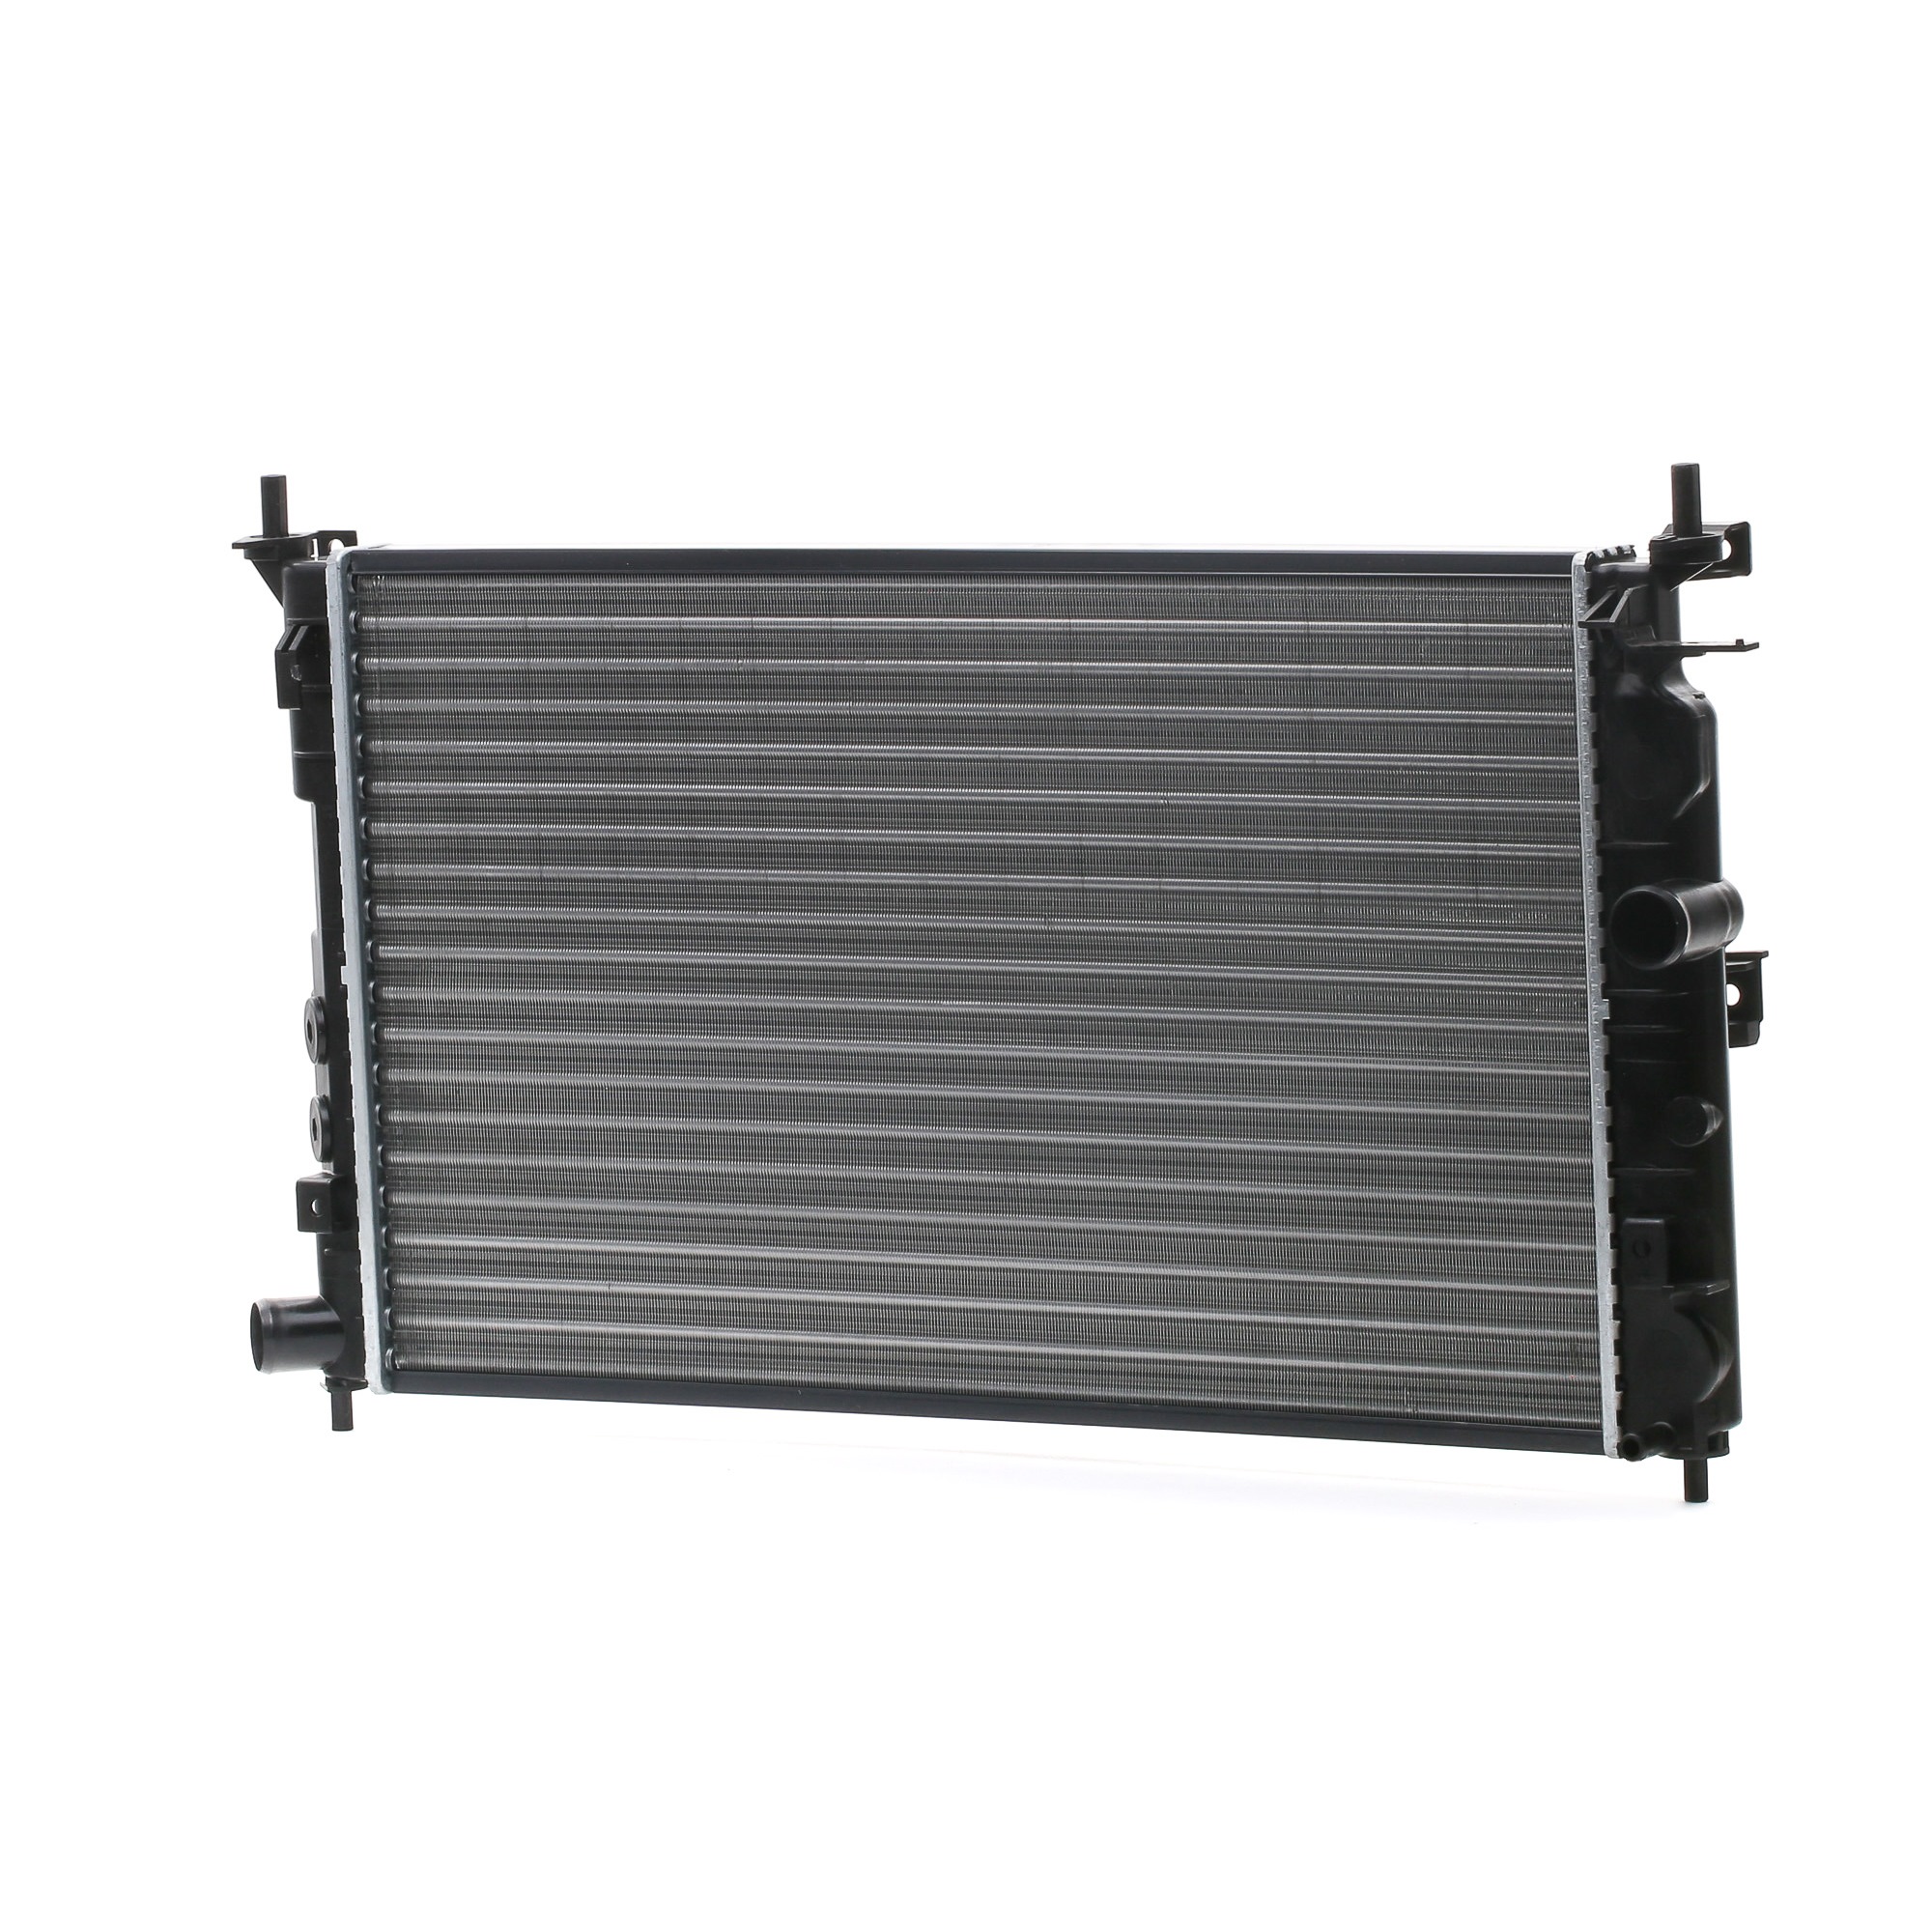 STARK SKRD-0120078 Engine radiator Aluminium, Plastic, for vehicles with air conditioning, Manual Transmission